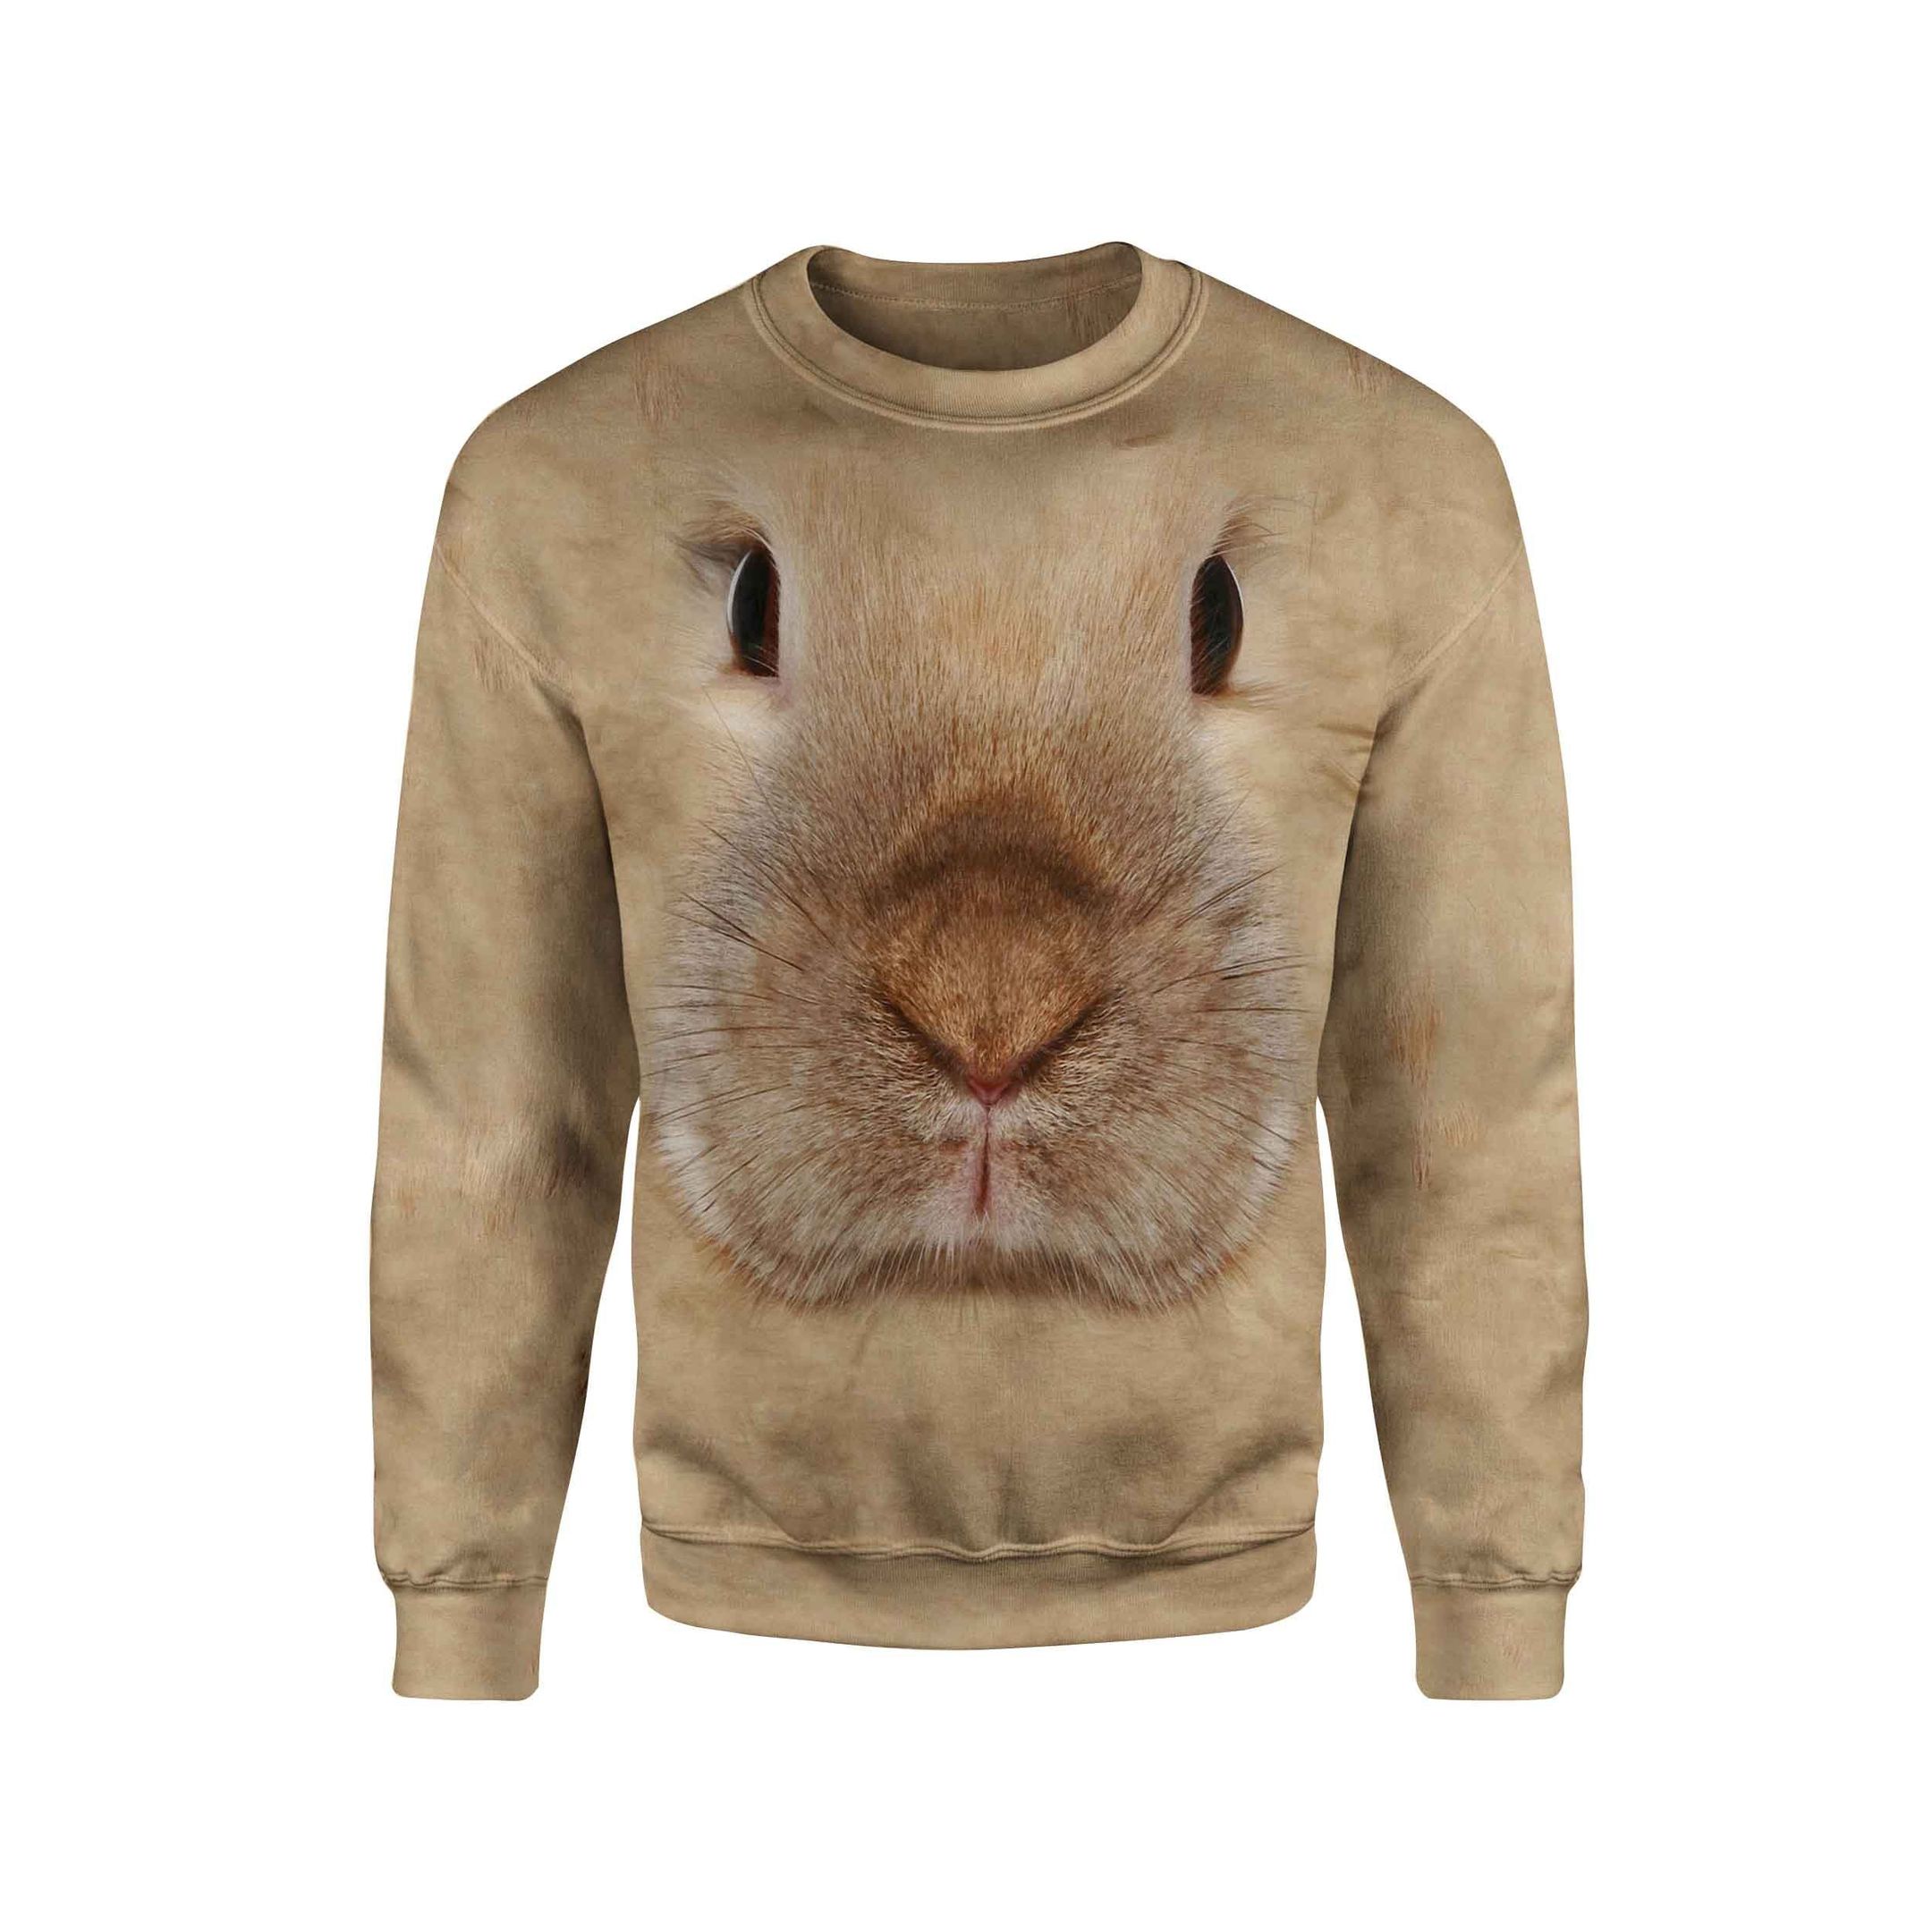 3D All Over Printed Rabbit Sweatshirt